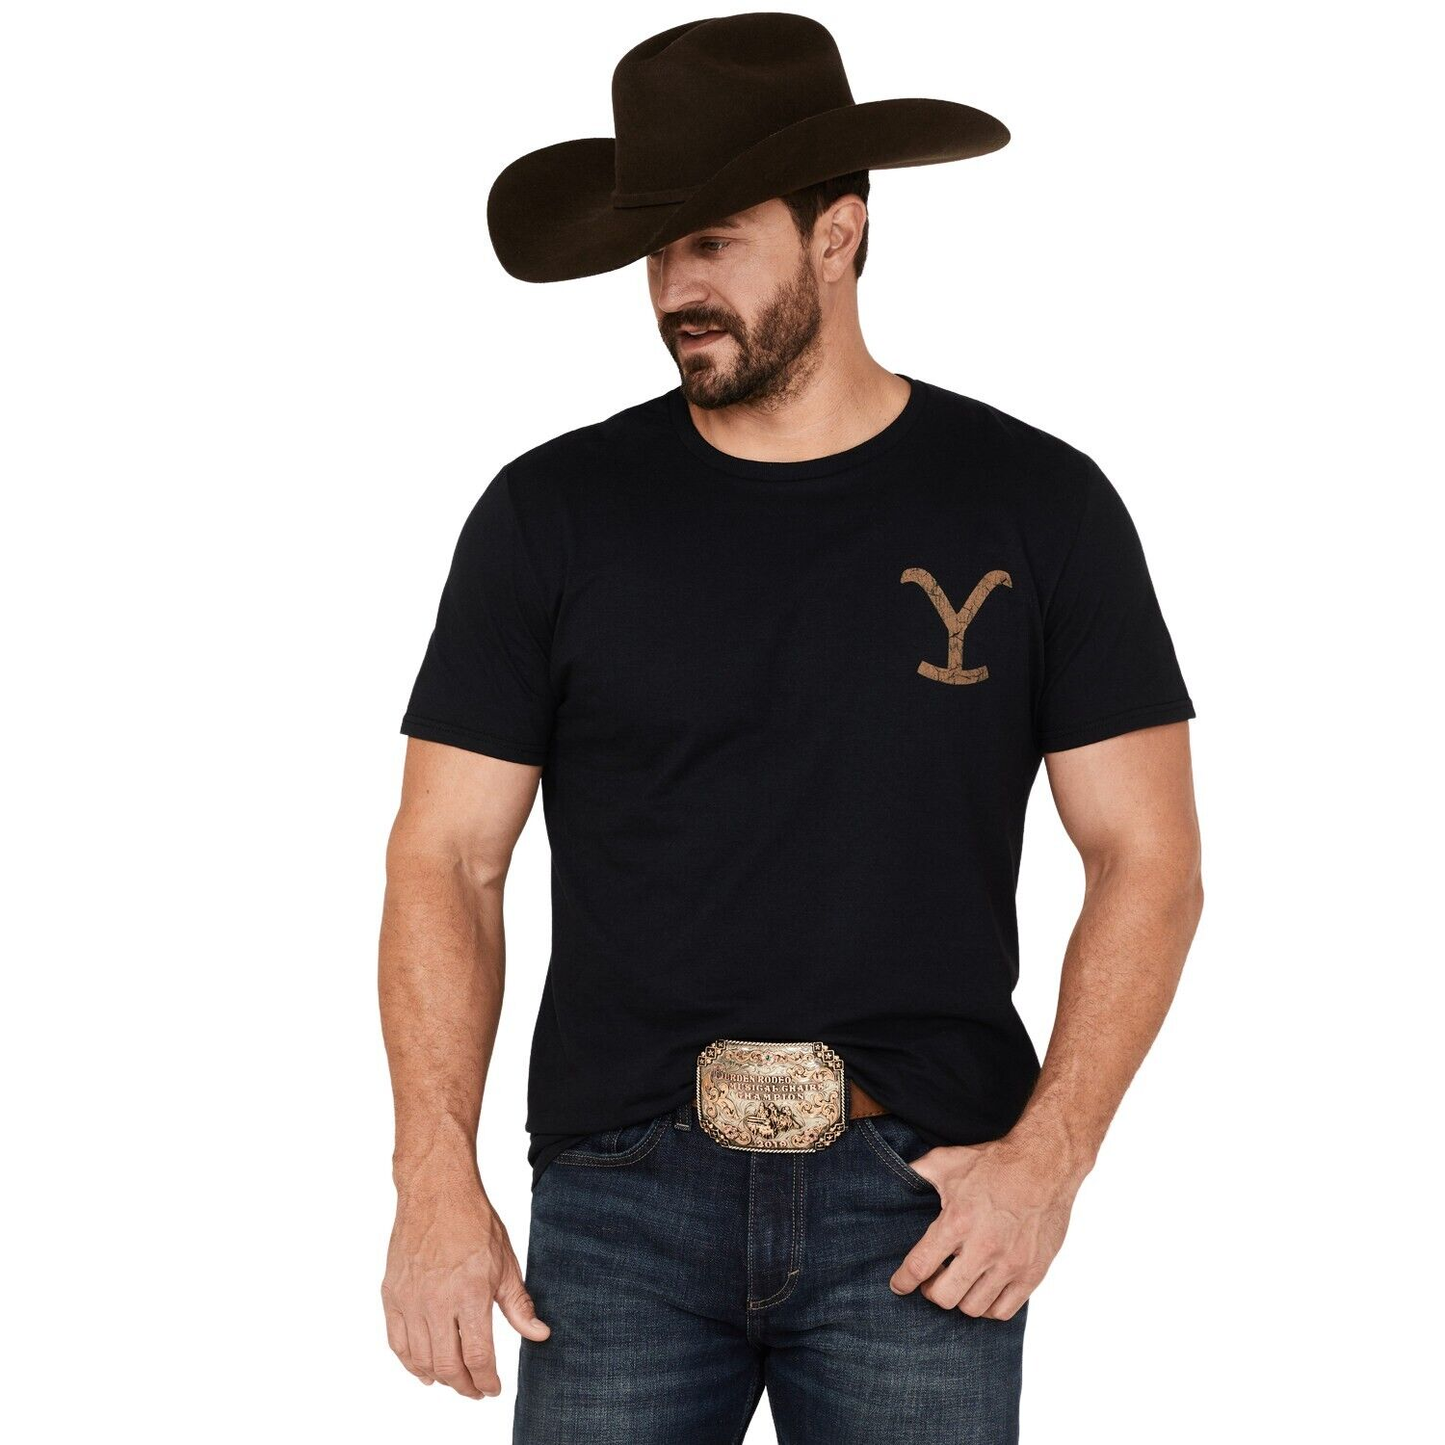 Yellowstone® Men's "My Land My Rules" Navy Graphic T-Shirt 66-331-239